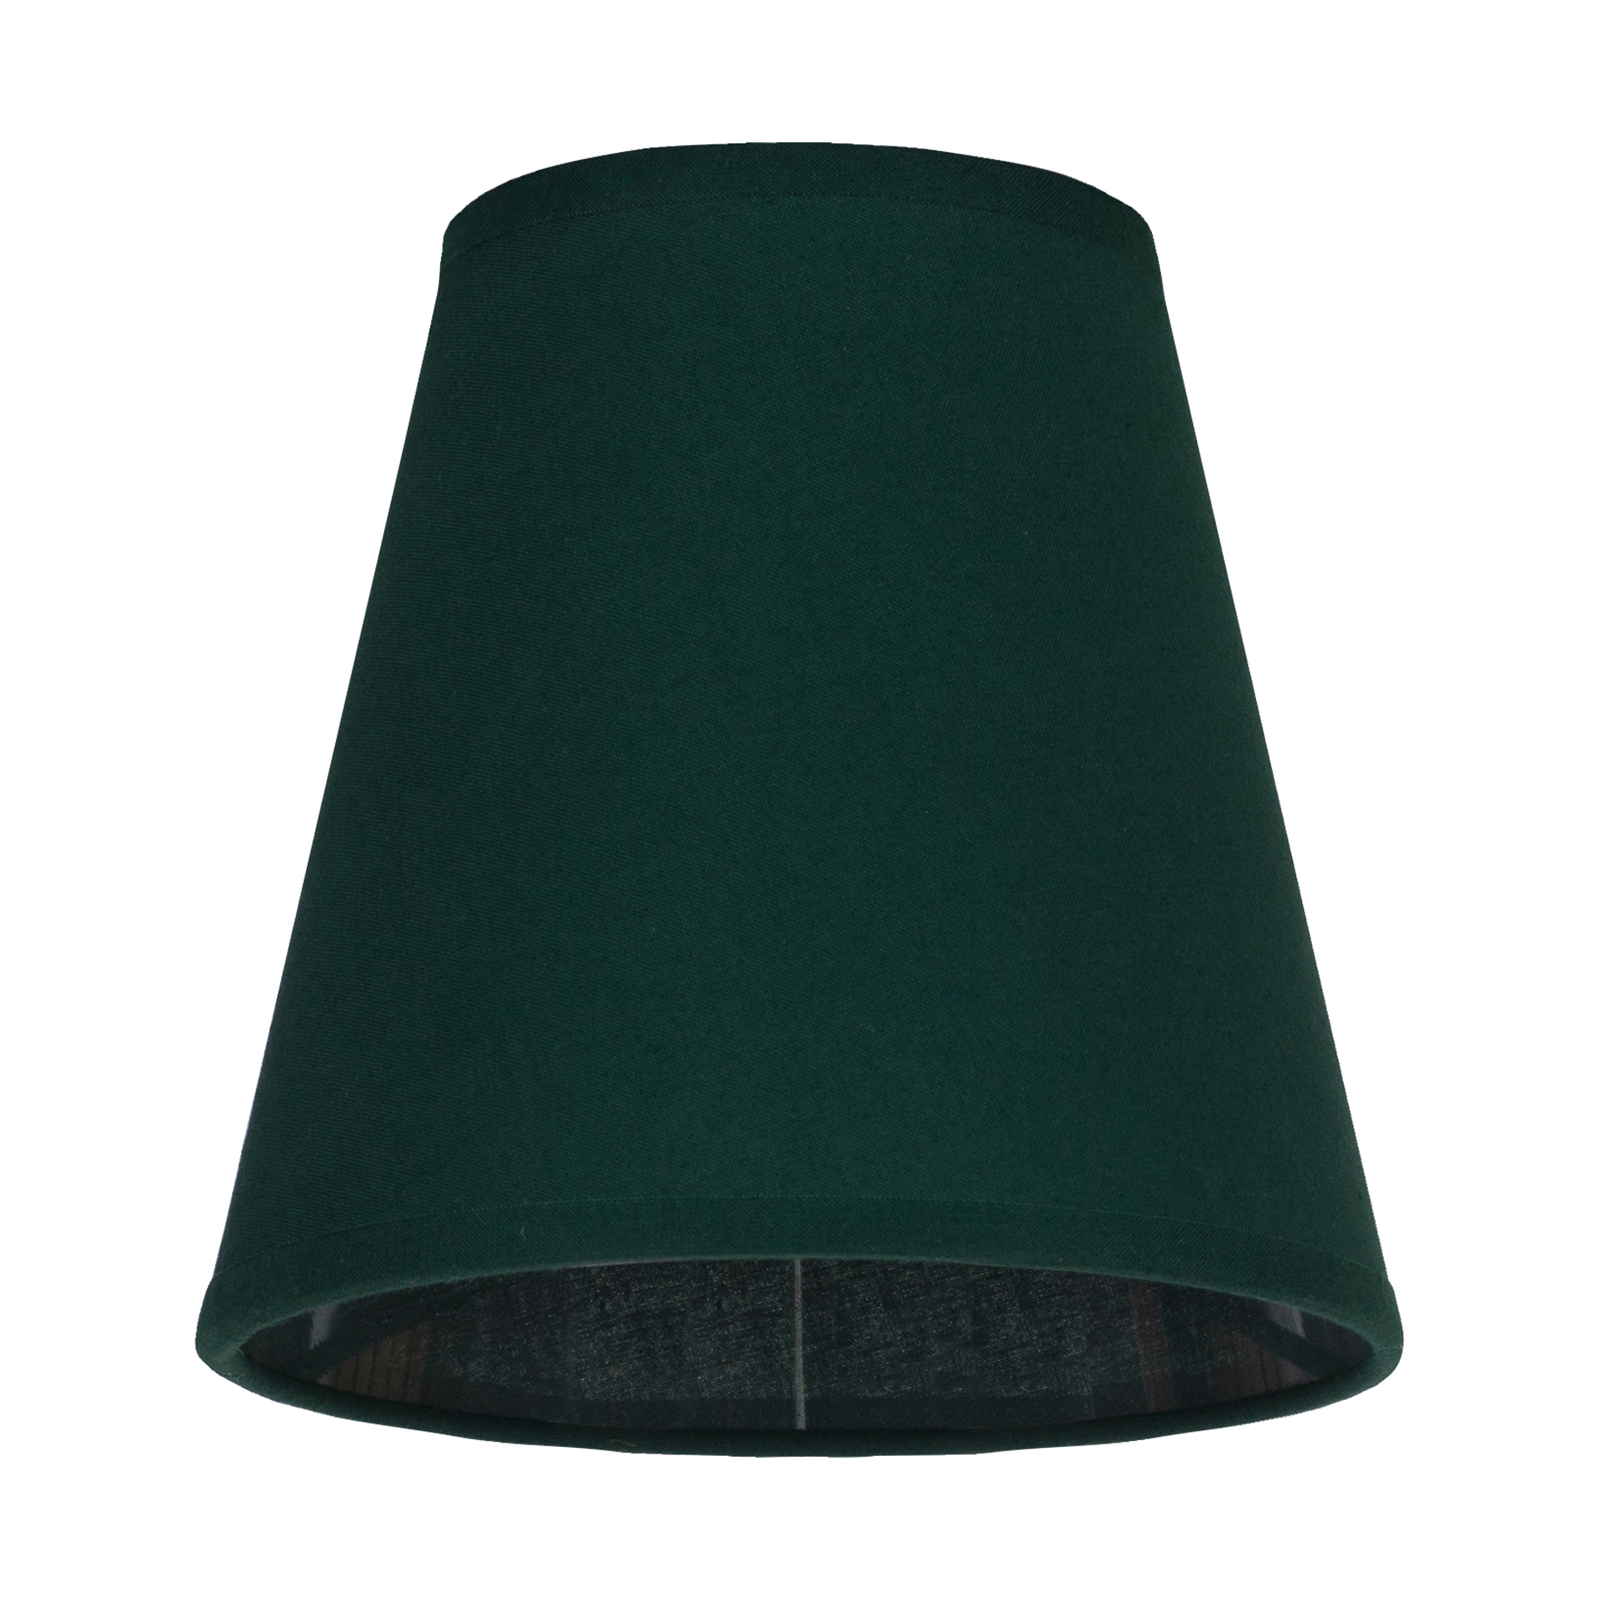 Klosz lampy Cone AB, Ø 15 cm, zielony